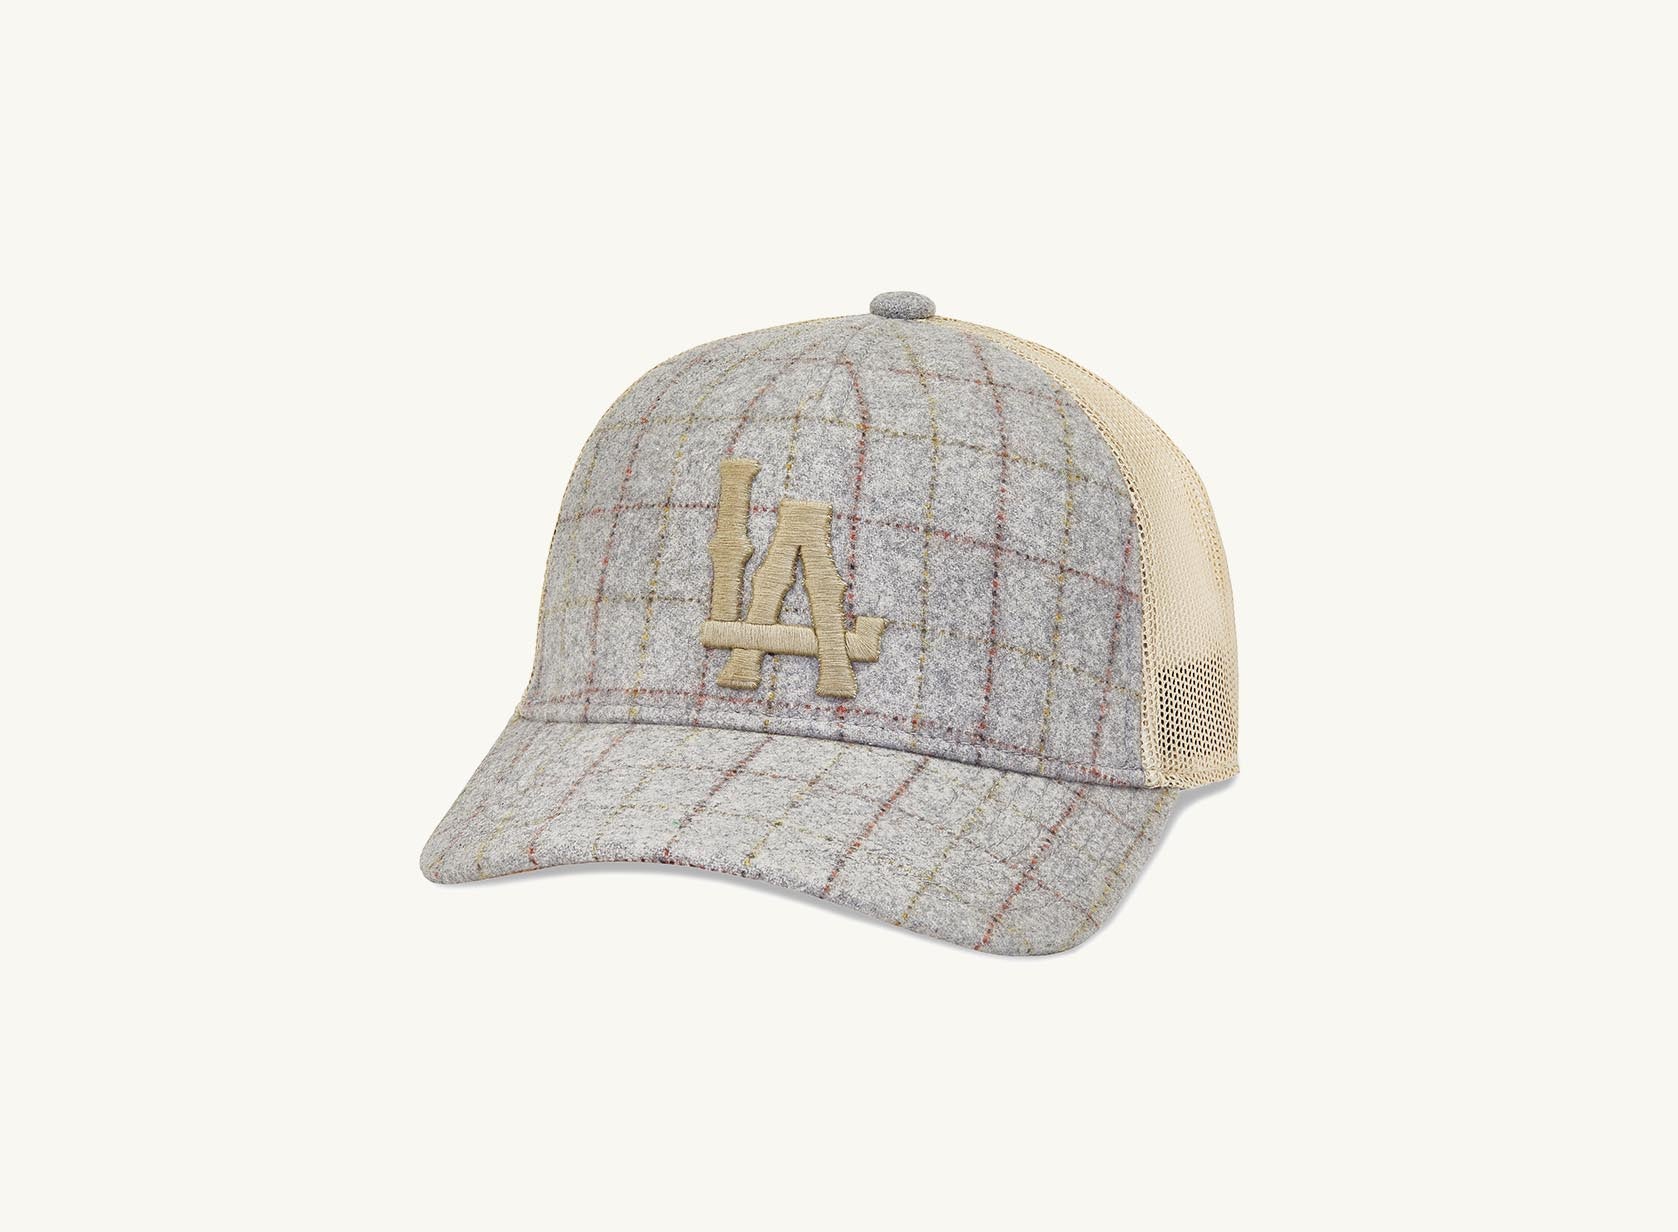 LA window pane baseball hat